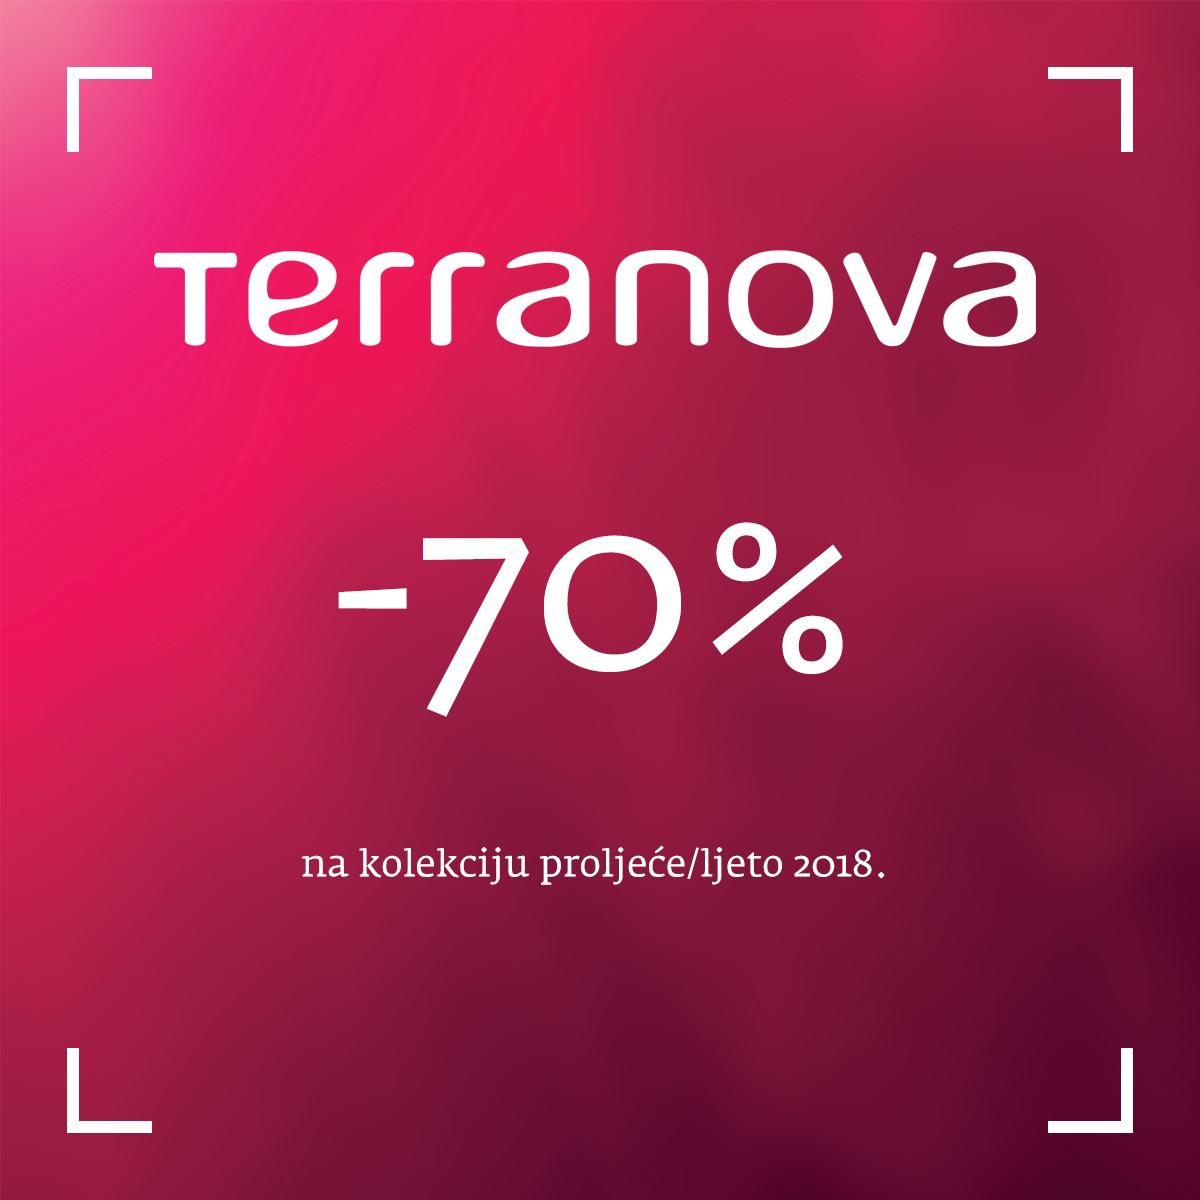 terranova inastagram 70